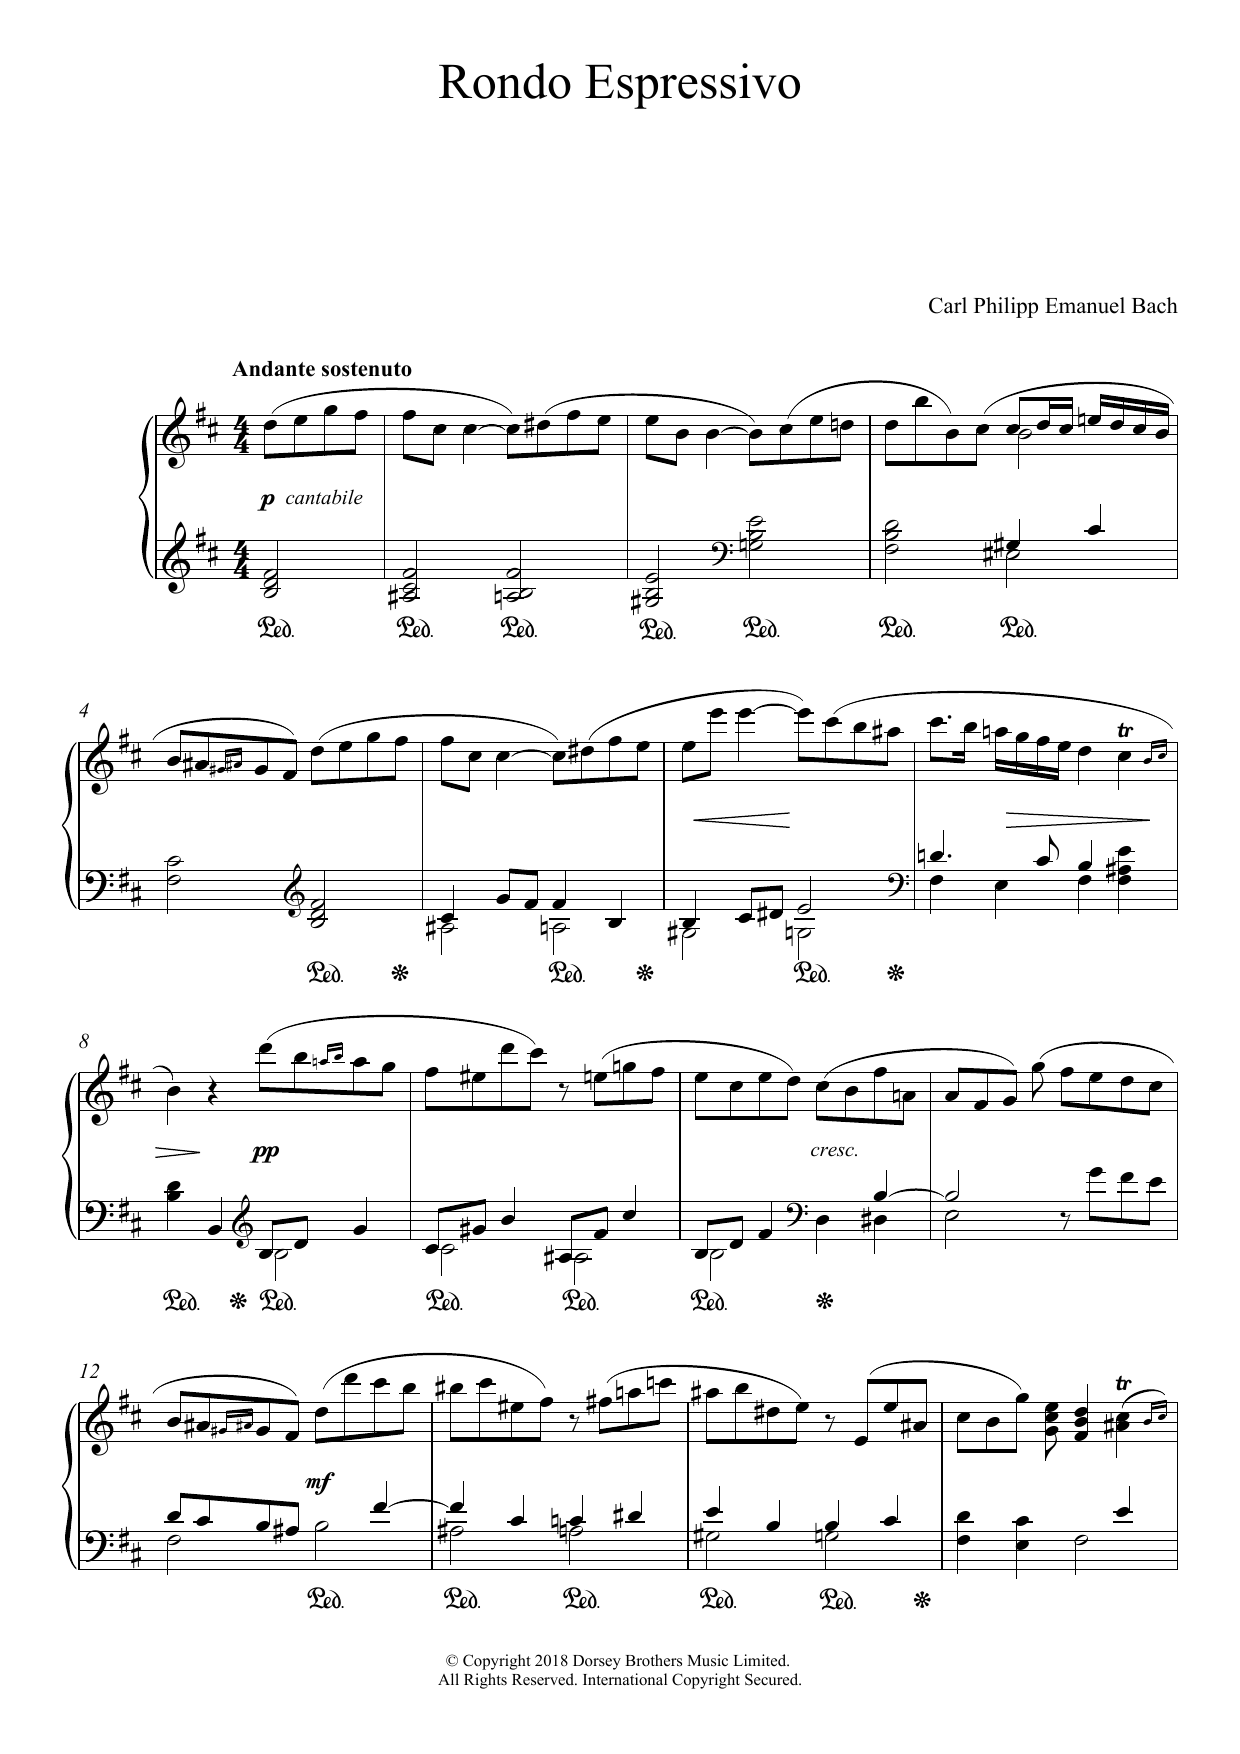 Carl Philipp Emanuel Bach Rondo Espressivo sheet music notes and chords arranged for Piano Solo